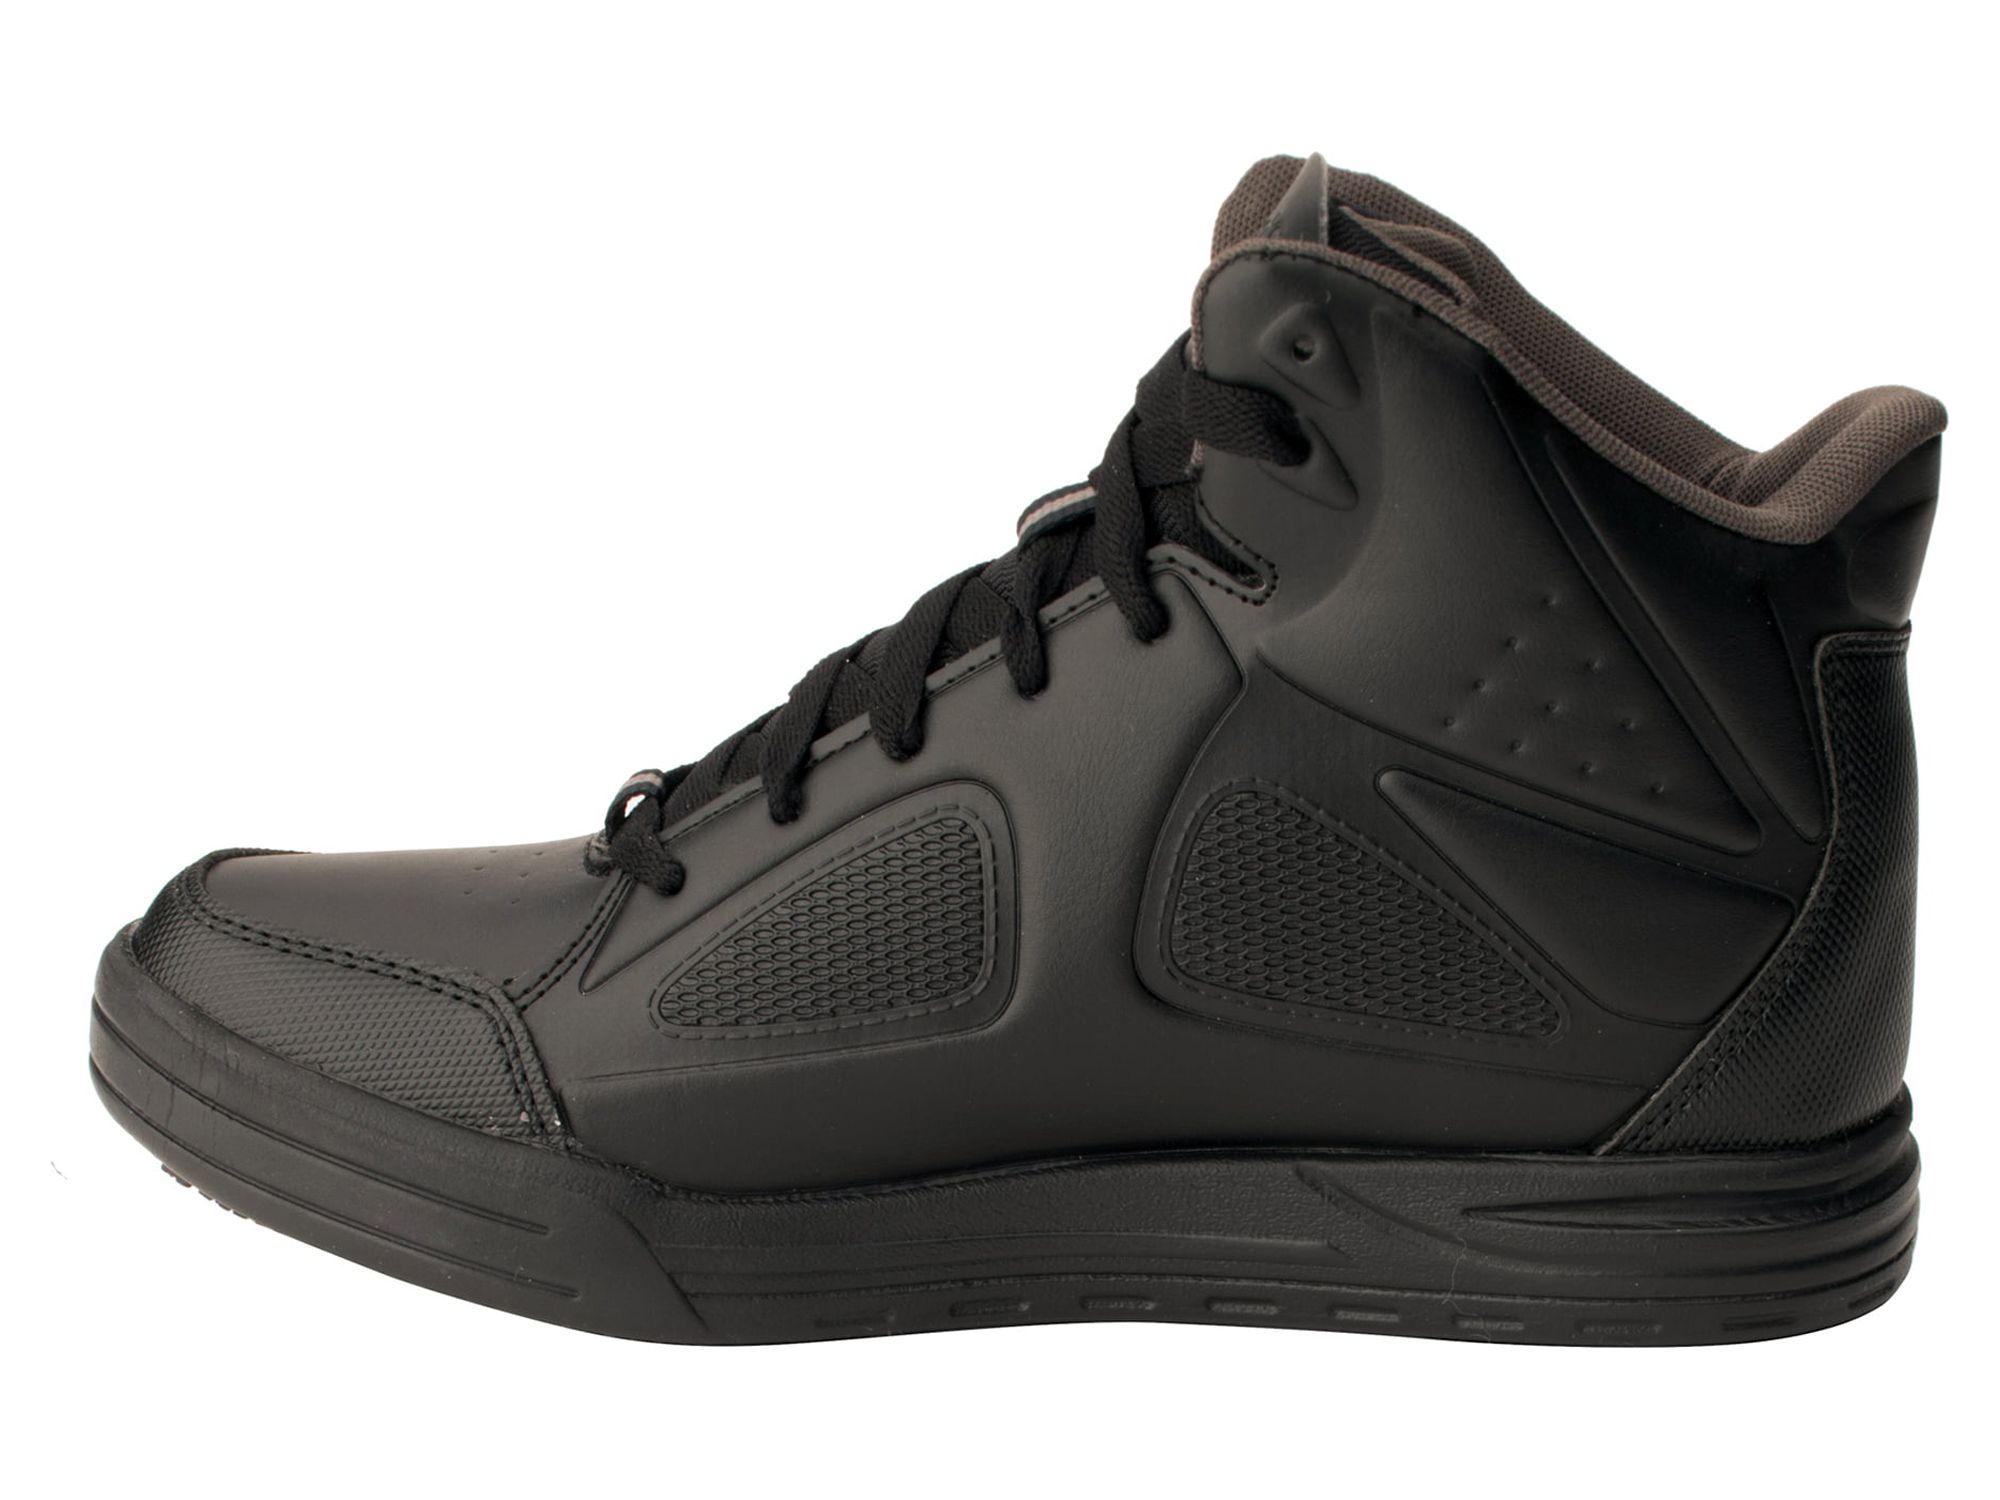 Tredsafe Men's Passit High Top Slip Resistant Shoes - image 3 of 6